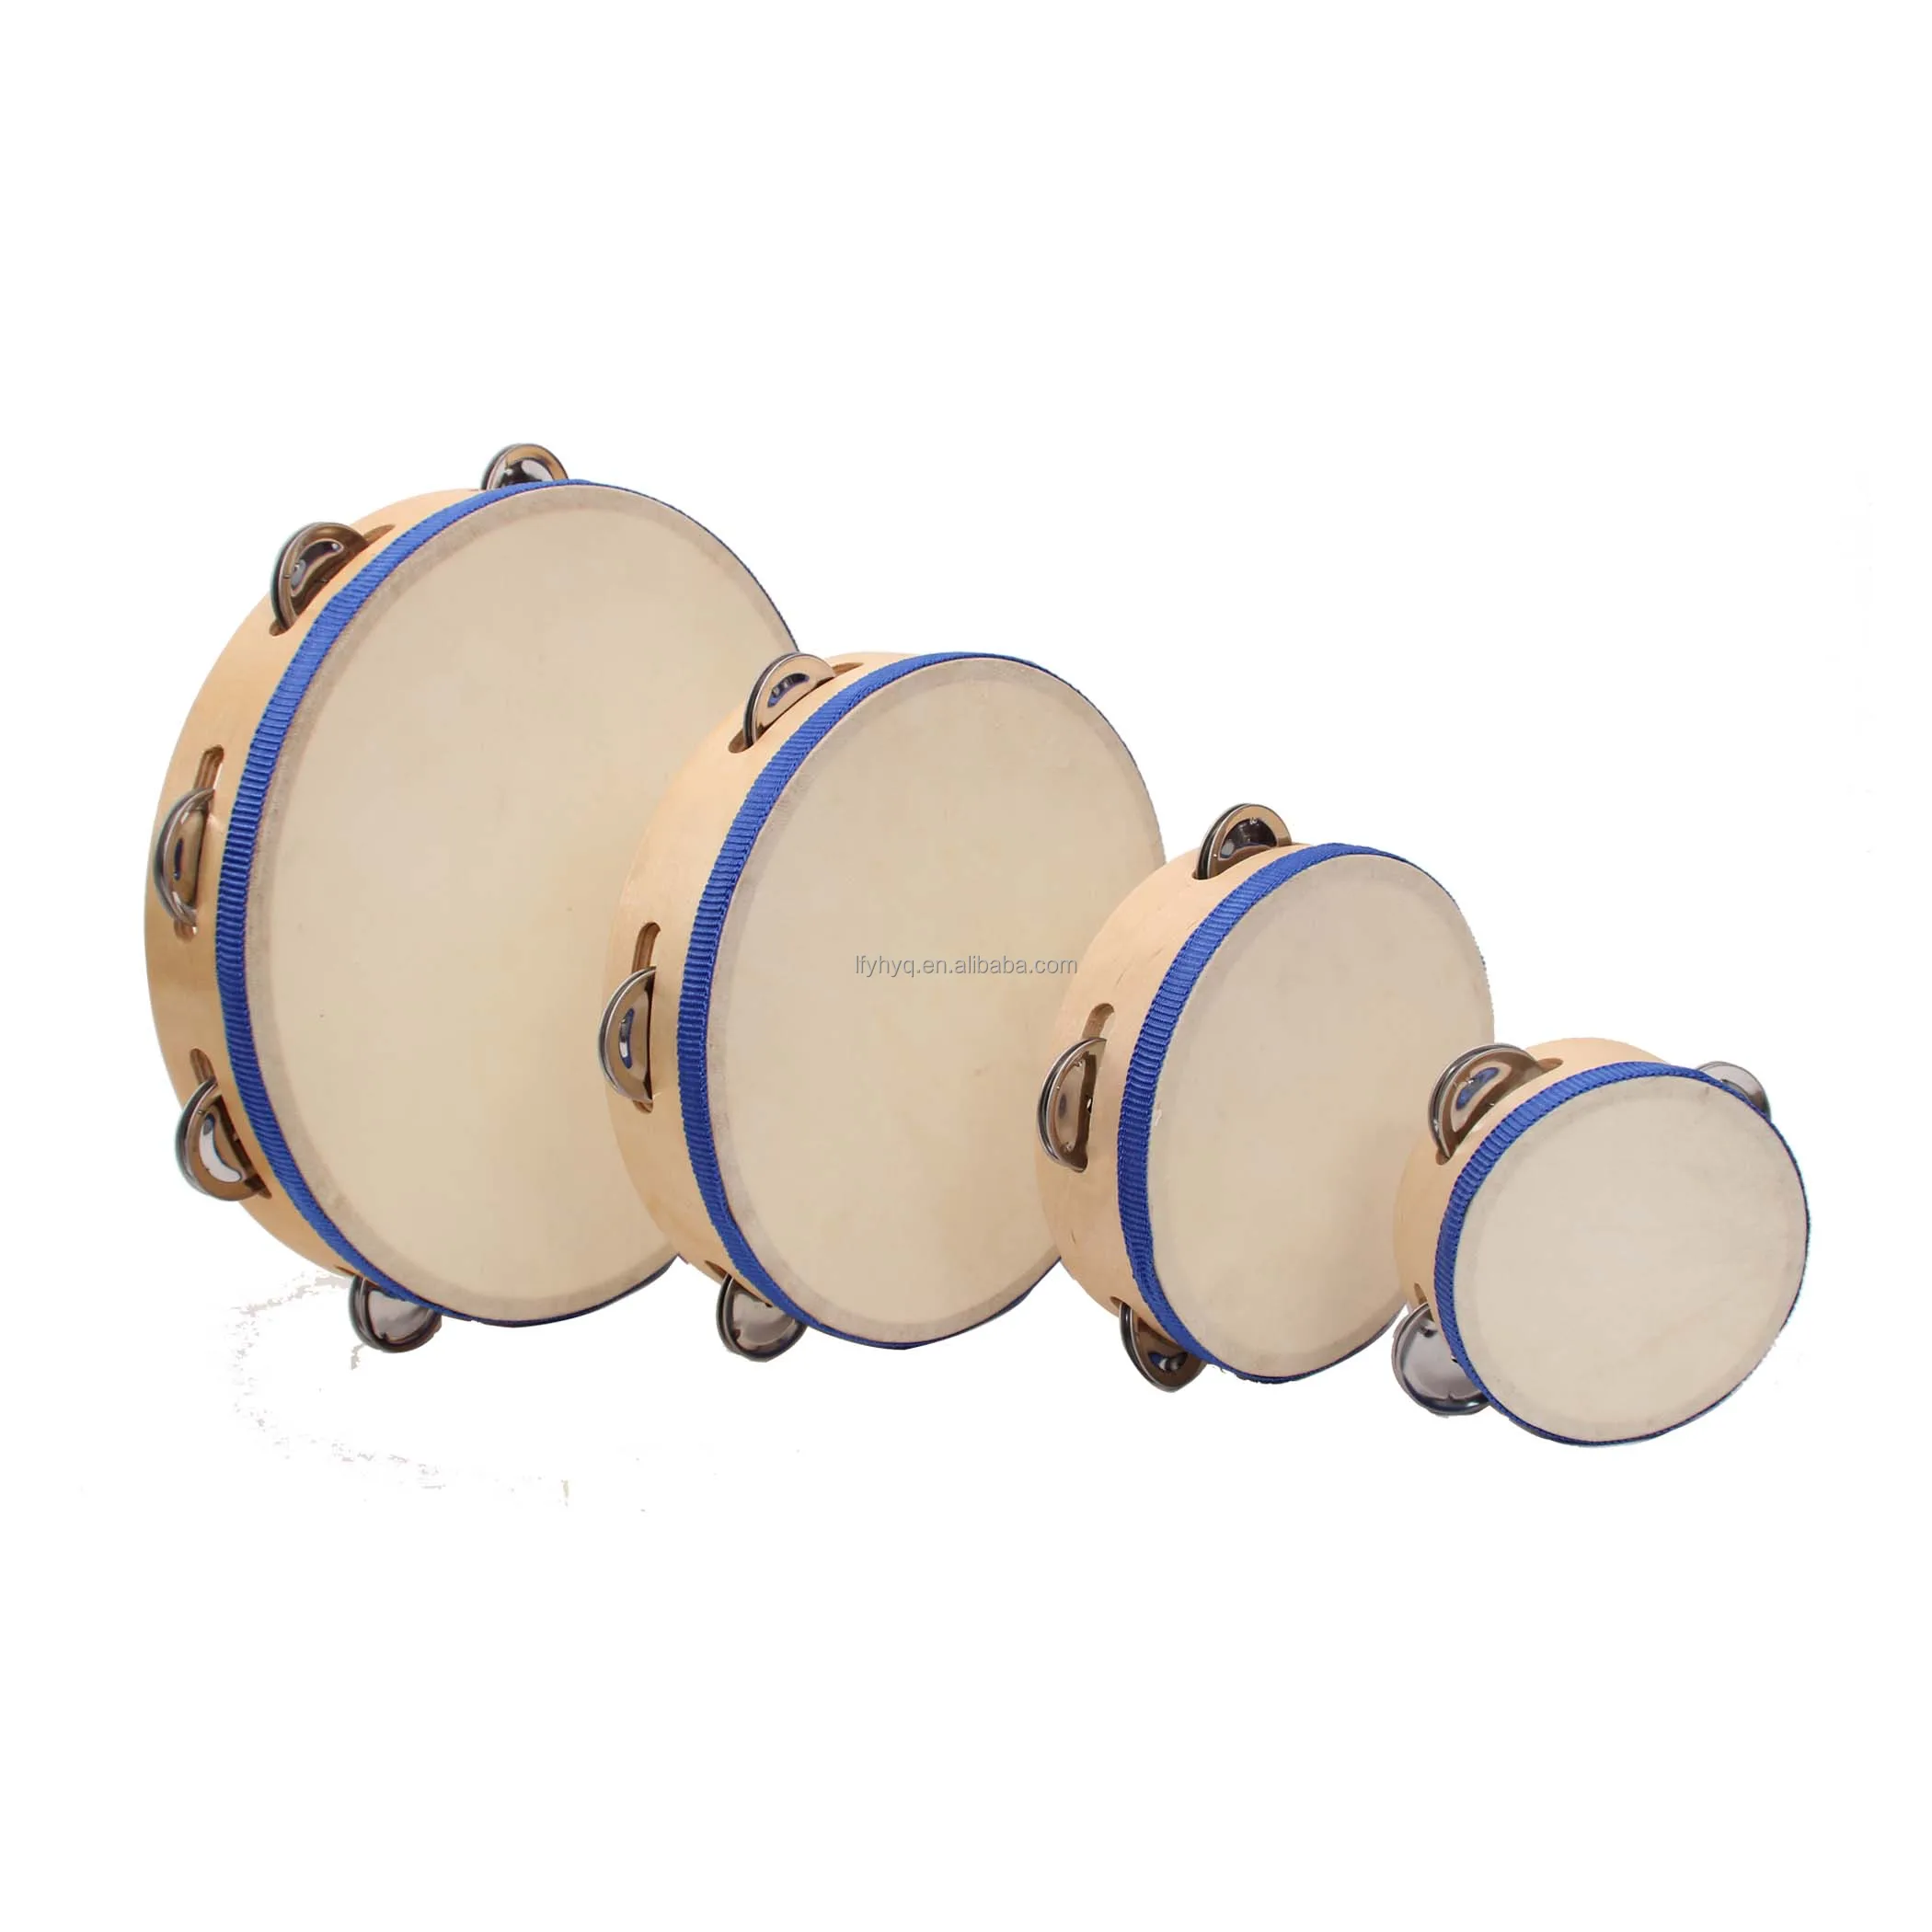 6 inch Wooden Handheld Tambourine Hand Drum Bell Musical Percussion Instrument Toy Gift Dilwe Wood Tambourine 